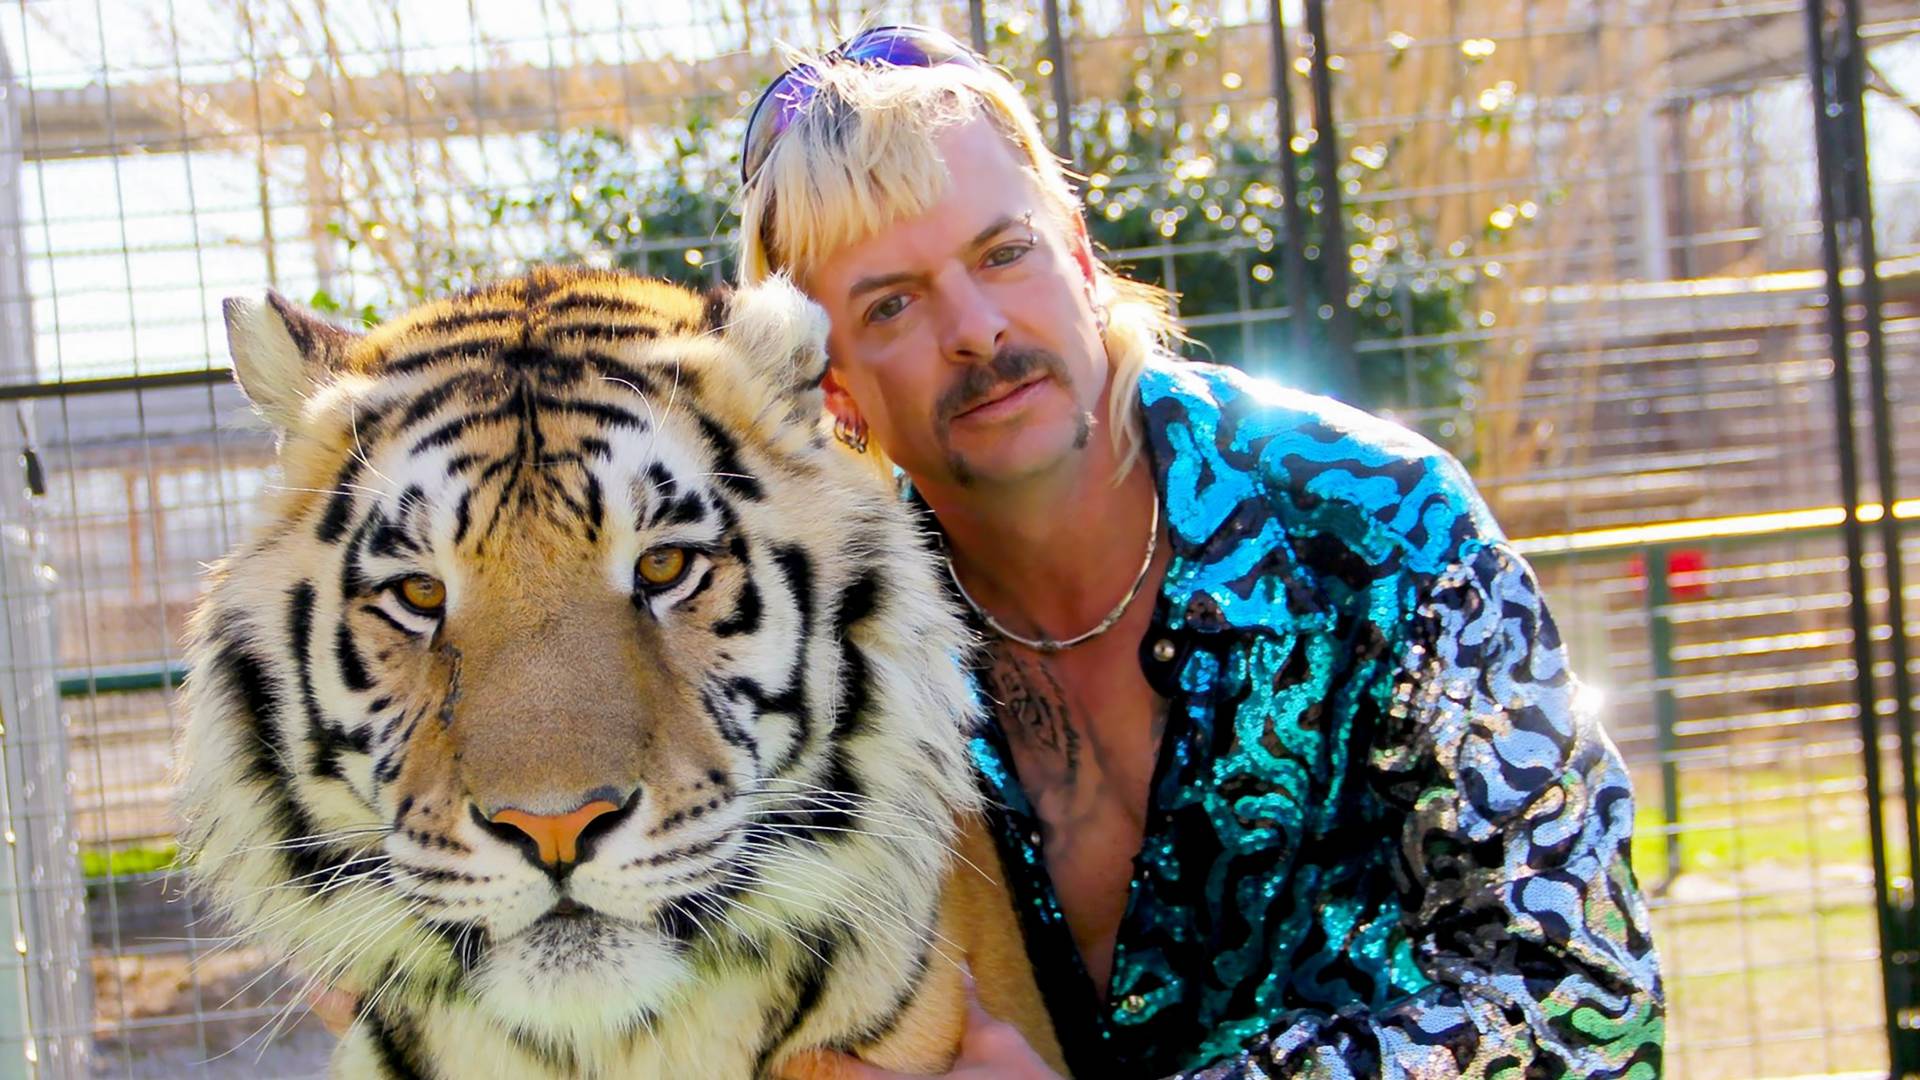 Must watch: Najbizarniji dokumentarac godine "Tiger King"